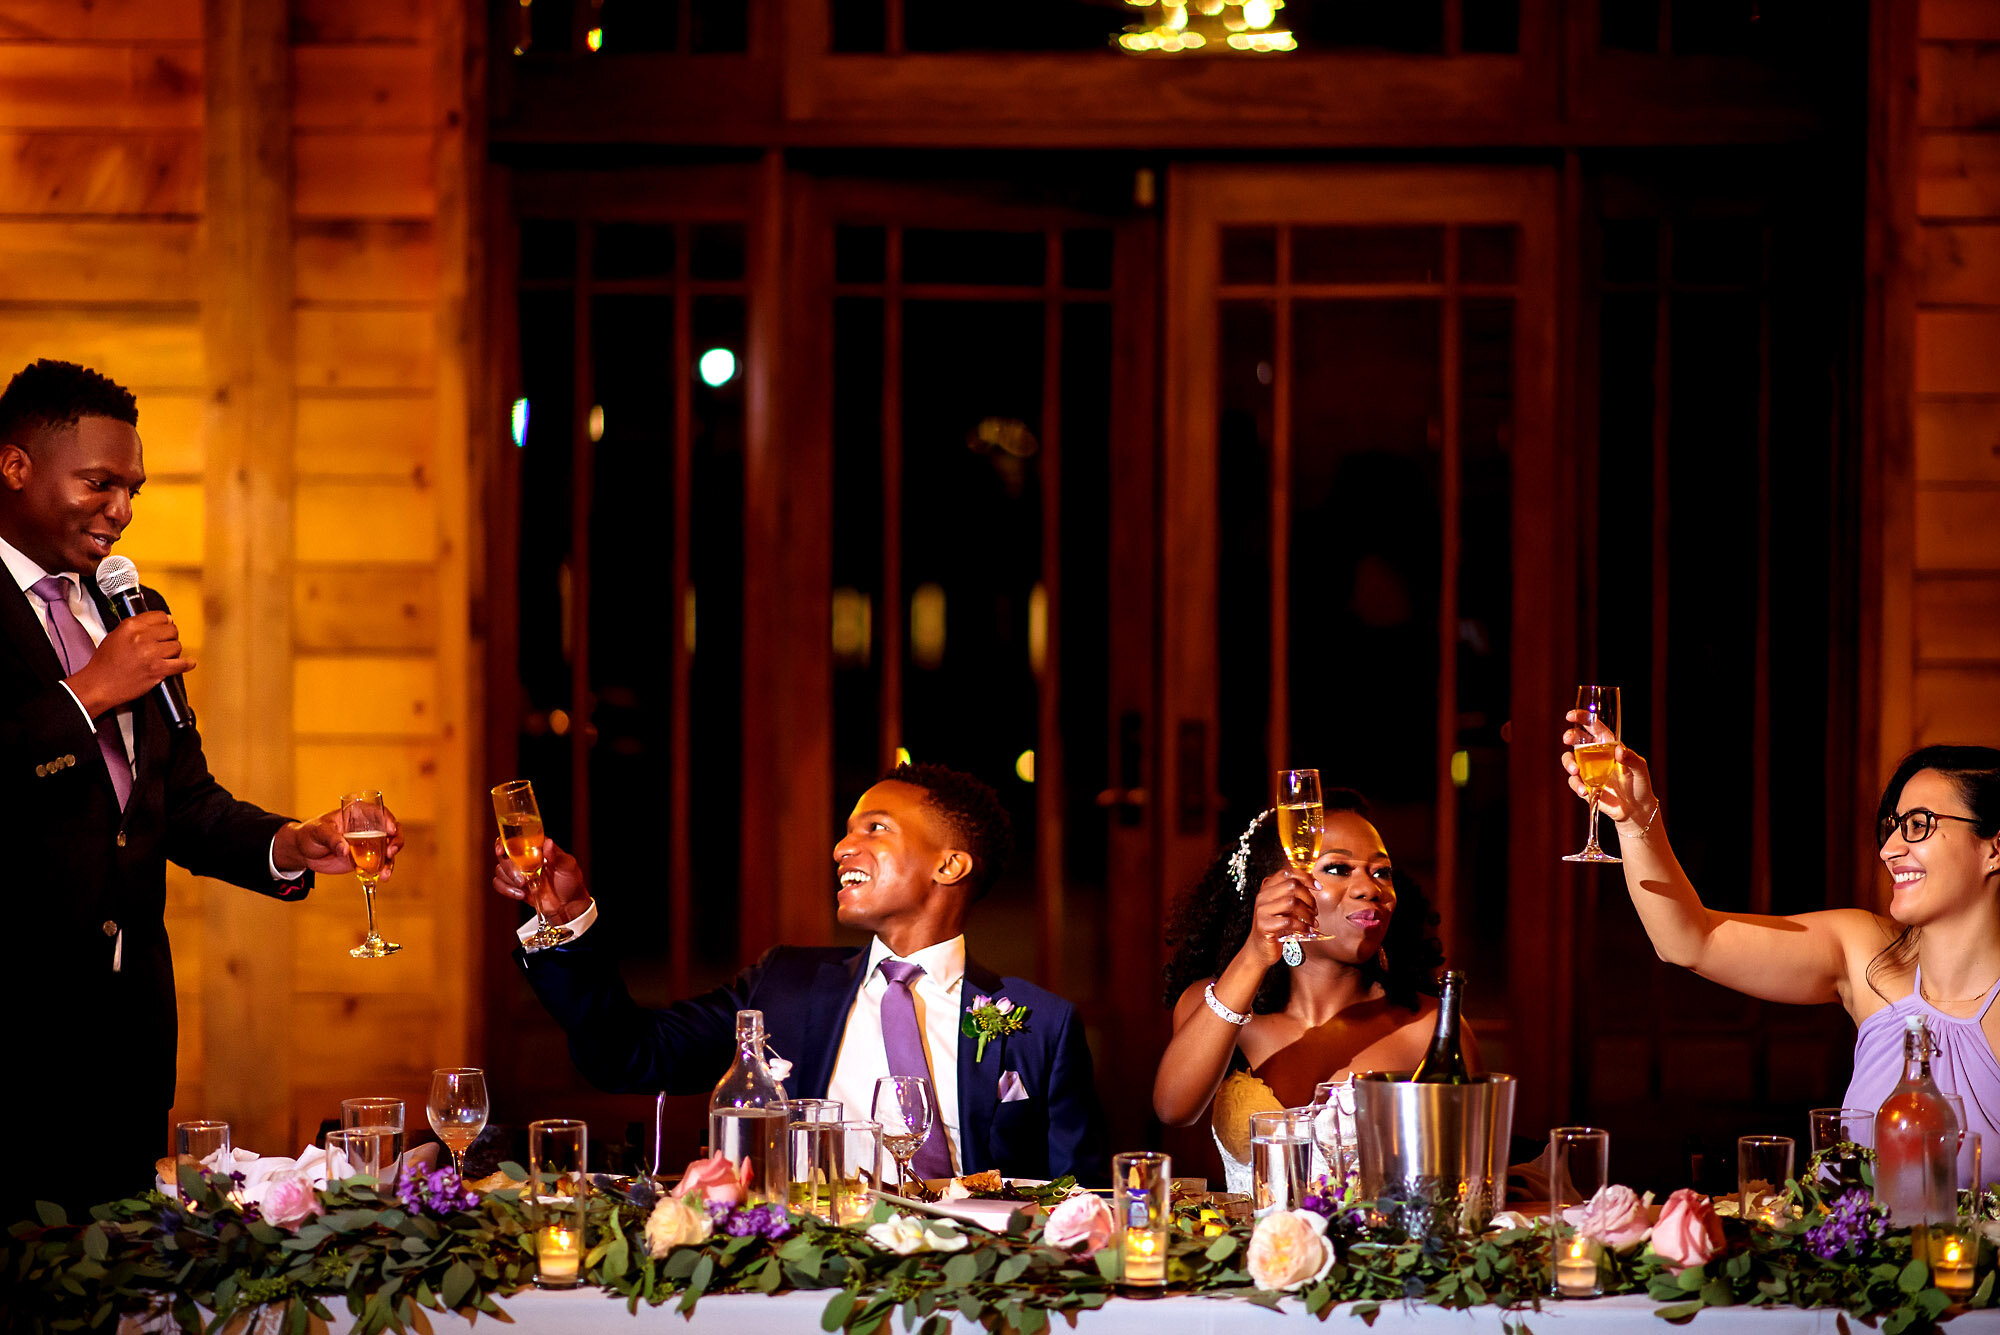 46-Austin-wedding-photographer-Jide-Alakija-toast with couple bestman and maid of honor.jpg.JPG